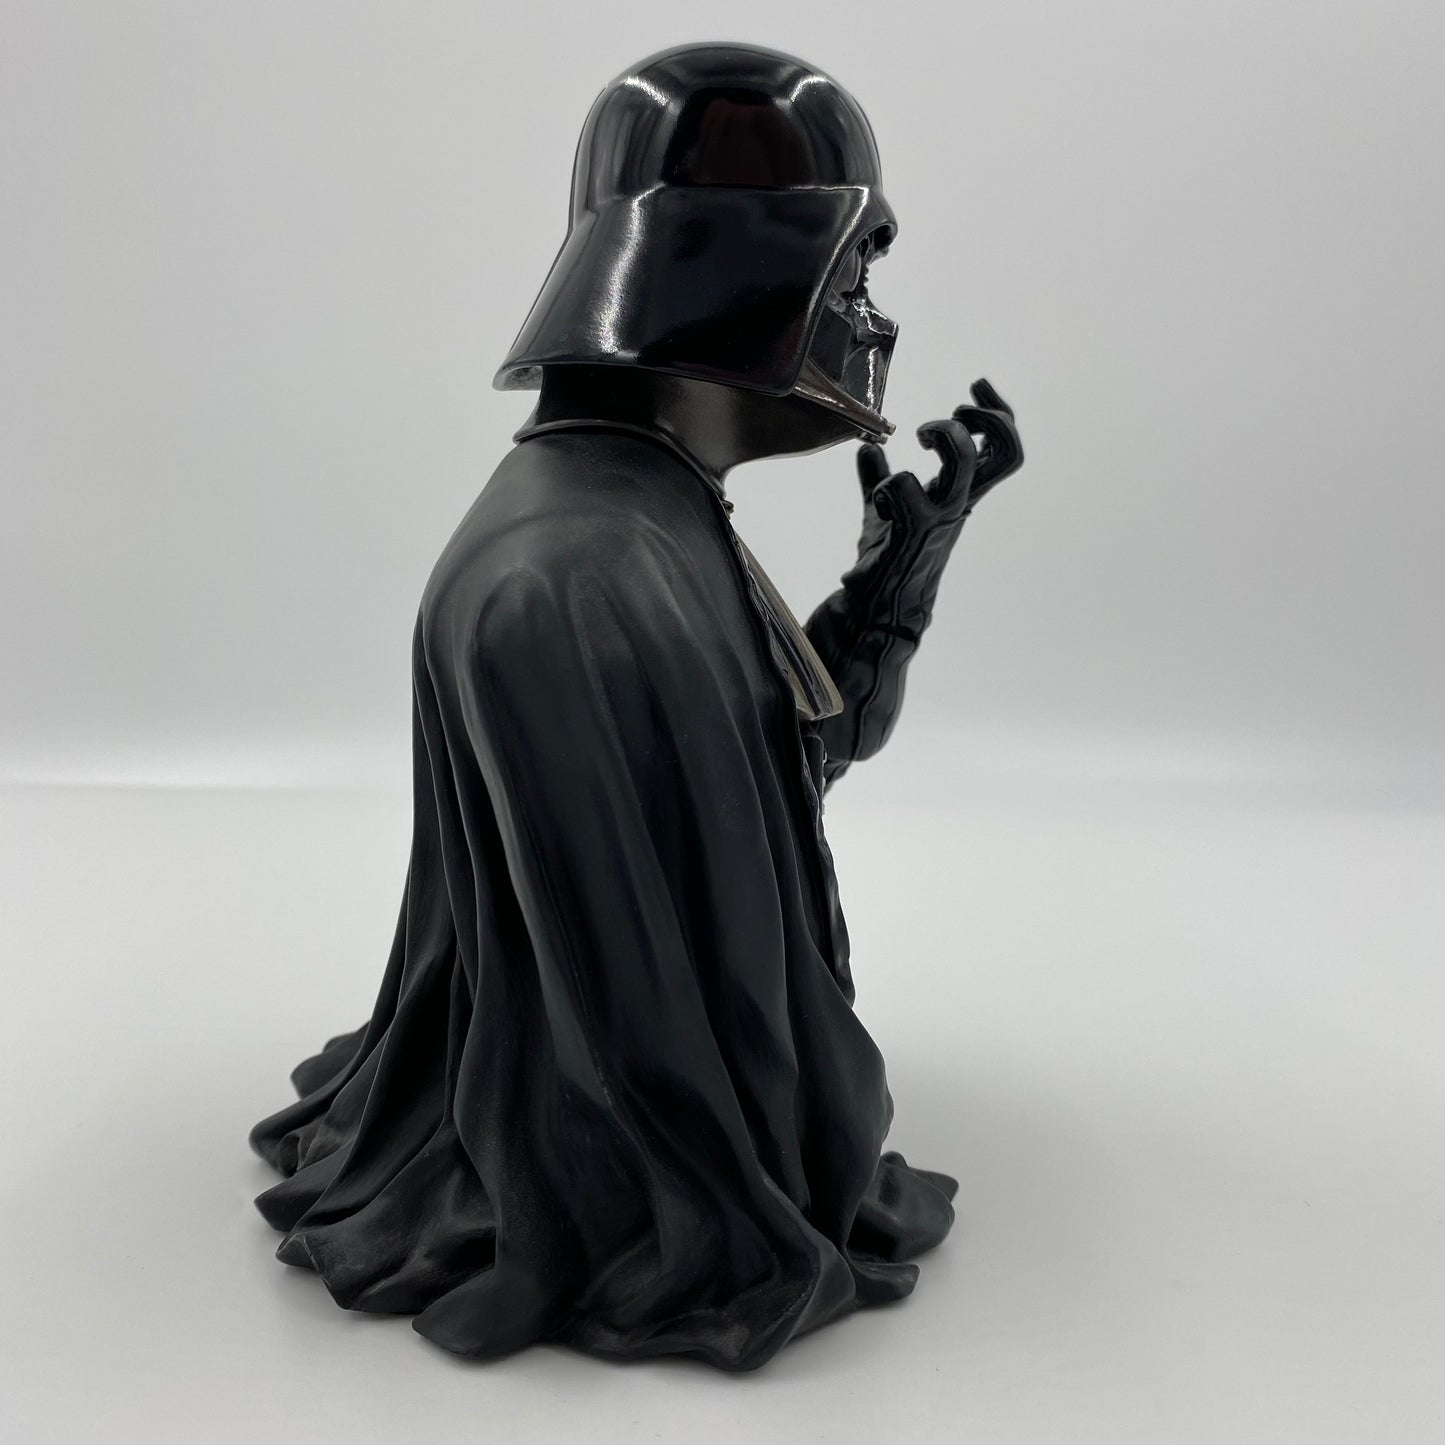 Star Wars Darth Vader collectible bust (2002) Gentle Giant Studios